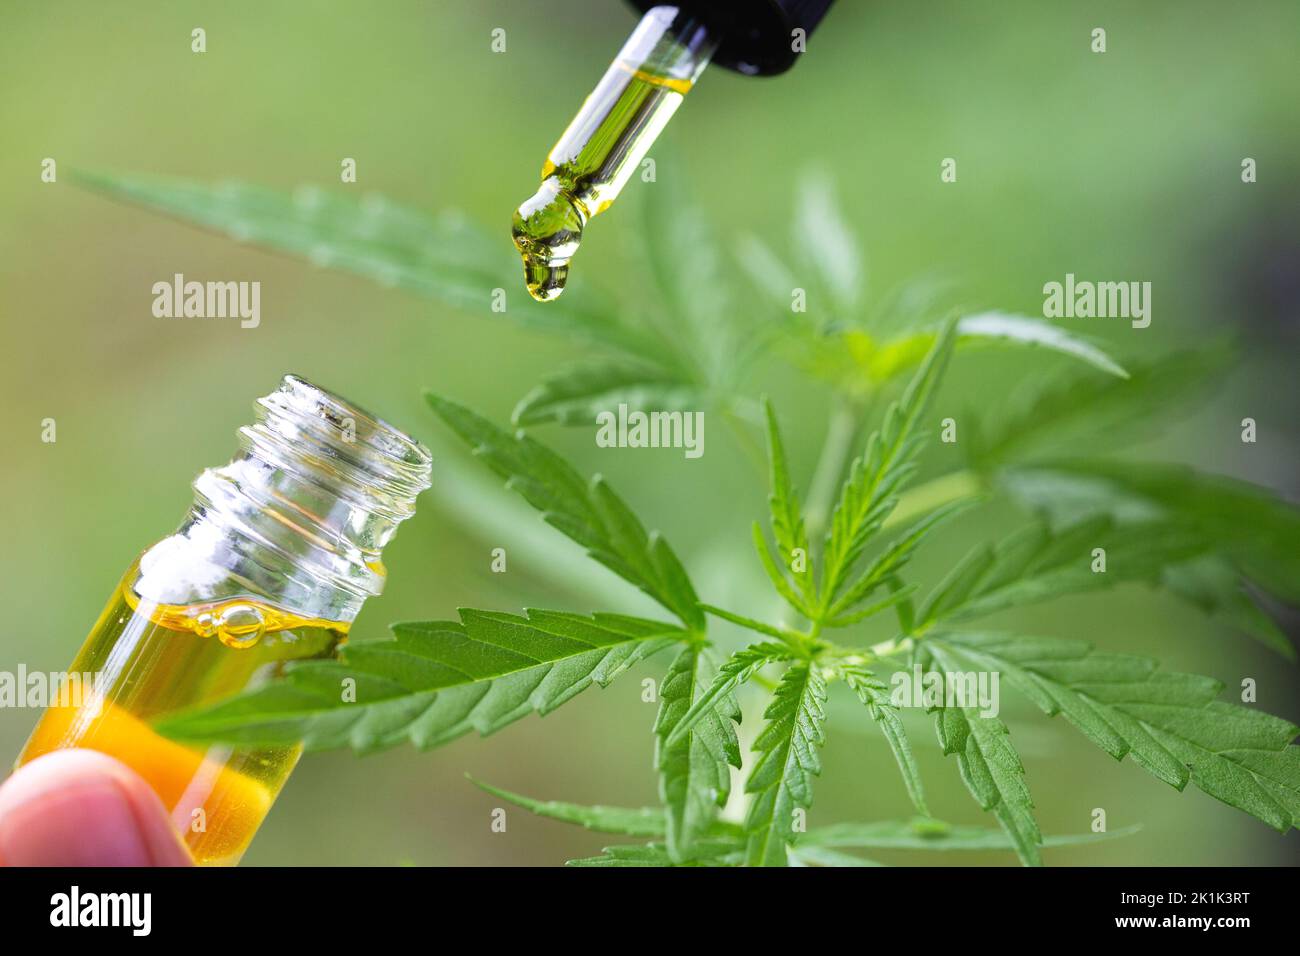 Hemp oil., Hand holding bottle of Cannabis oil against Marijuana plant, CBD oil pipette. Stock Photo